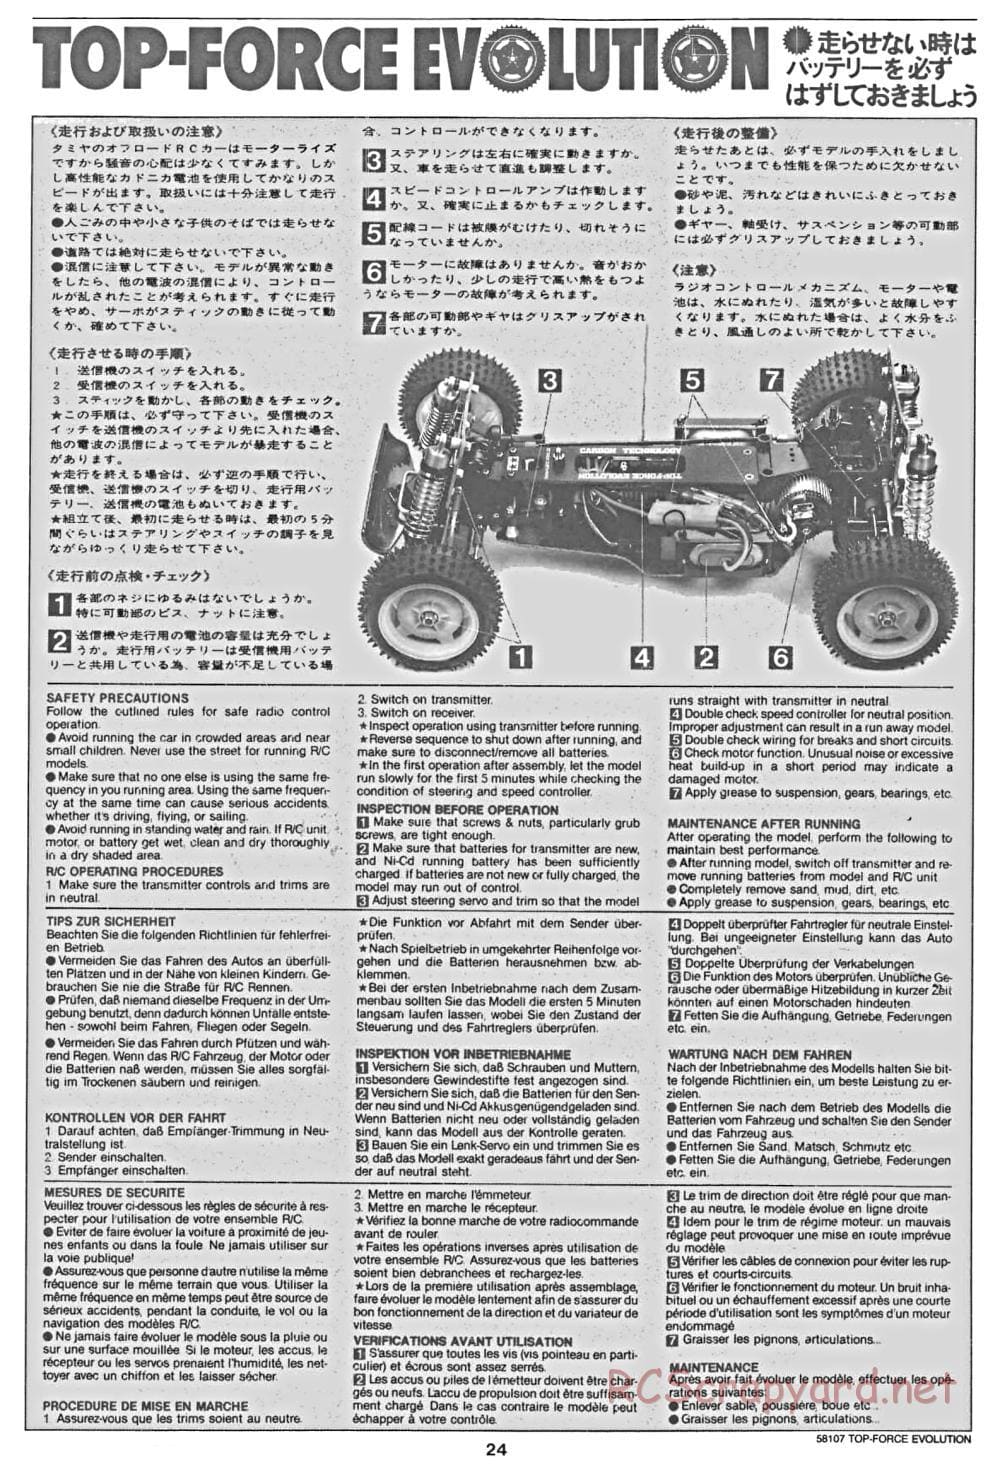 Tamiya - Top Force Evolution Chassis - Manual - Page 24